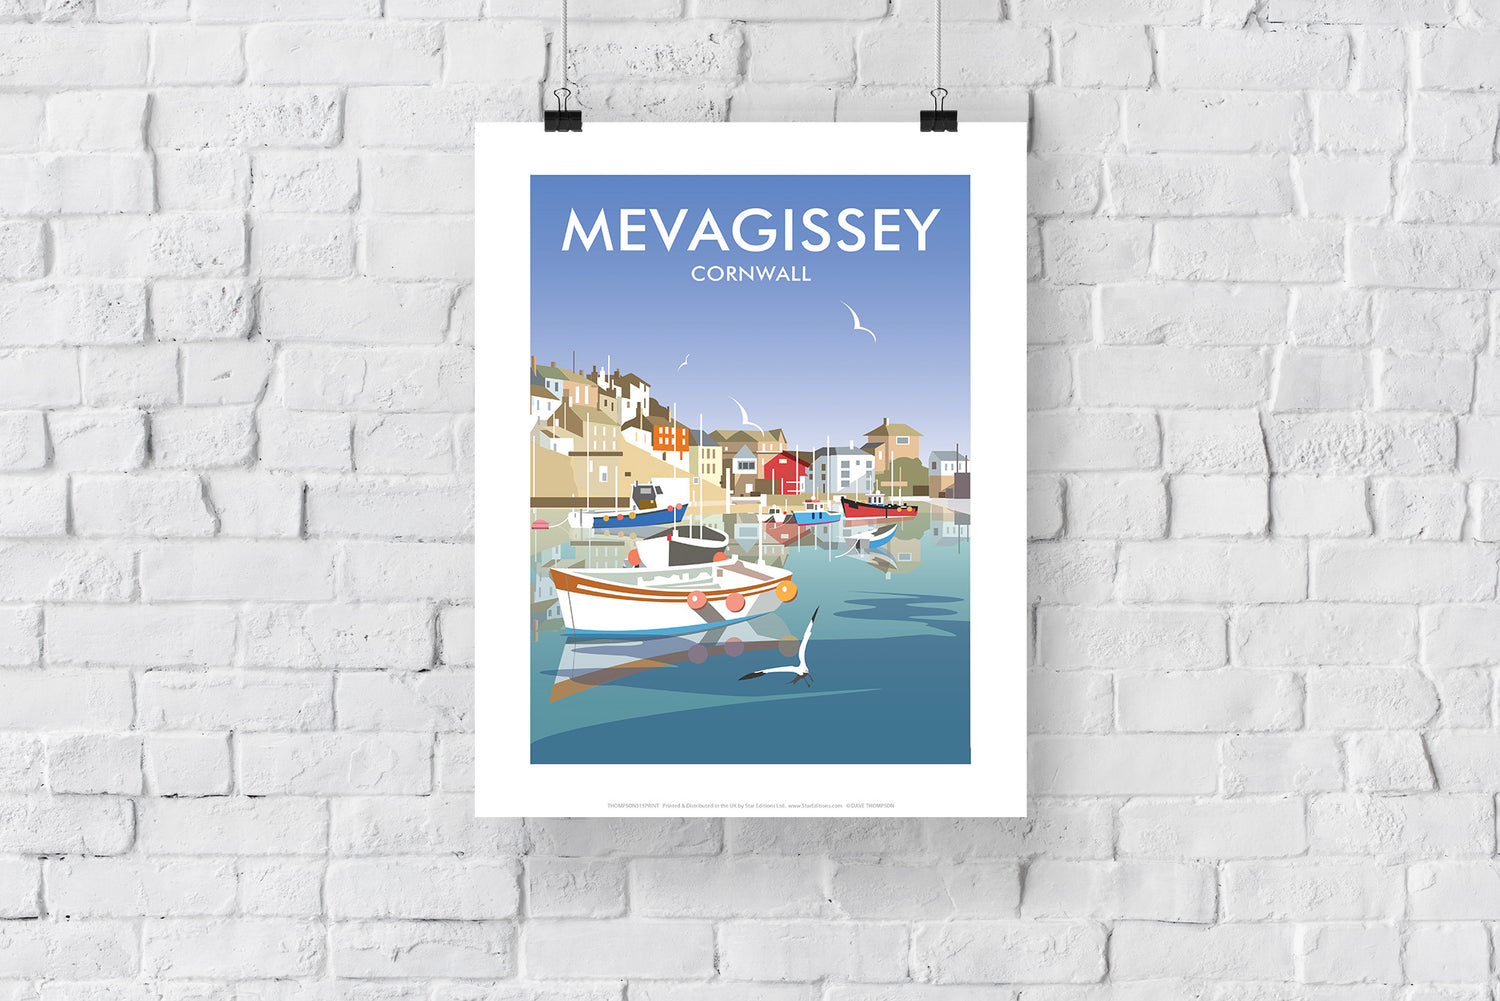 Mevagissey, Cornwall - Art Print